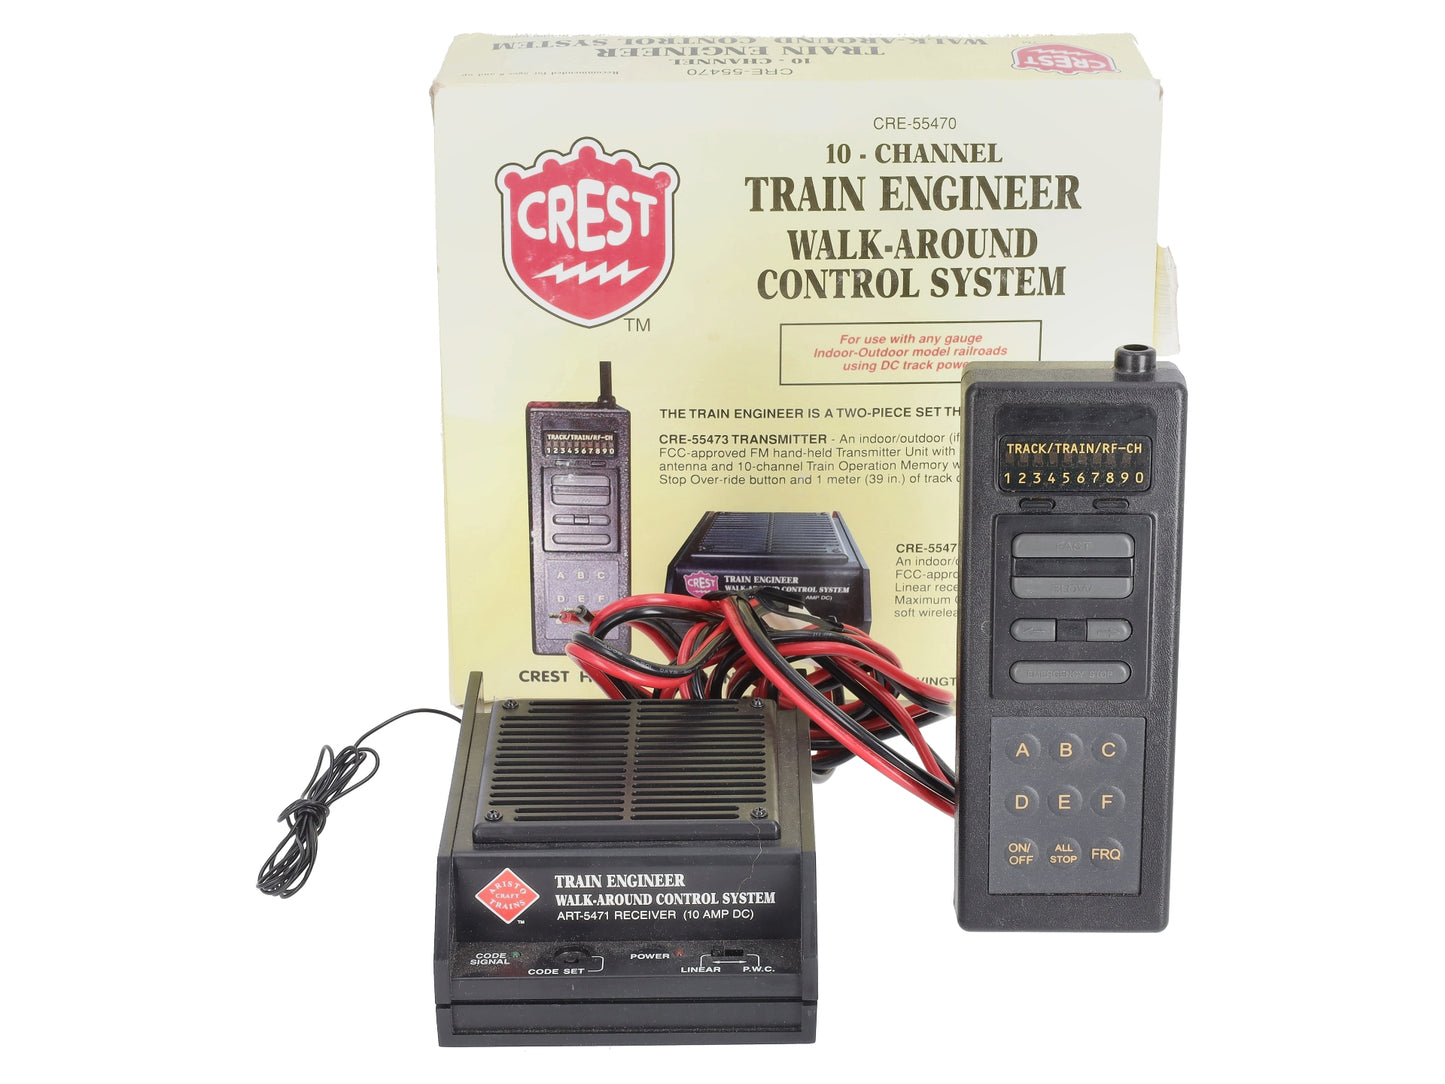 Crest CRE-55470 10 Channel Train Engineer Walk-Around Control System NIB